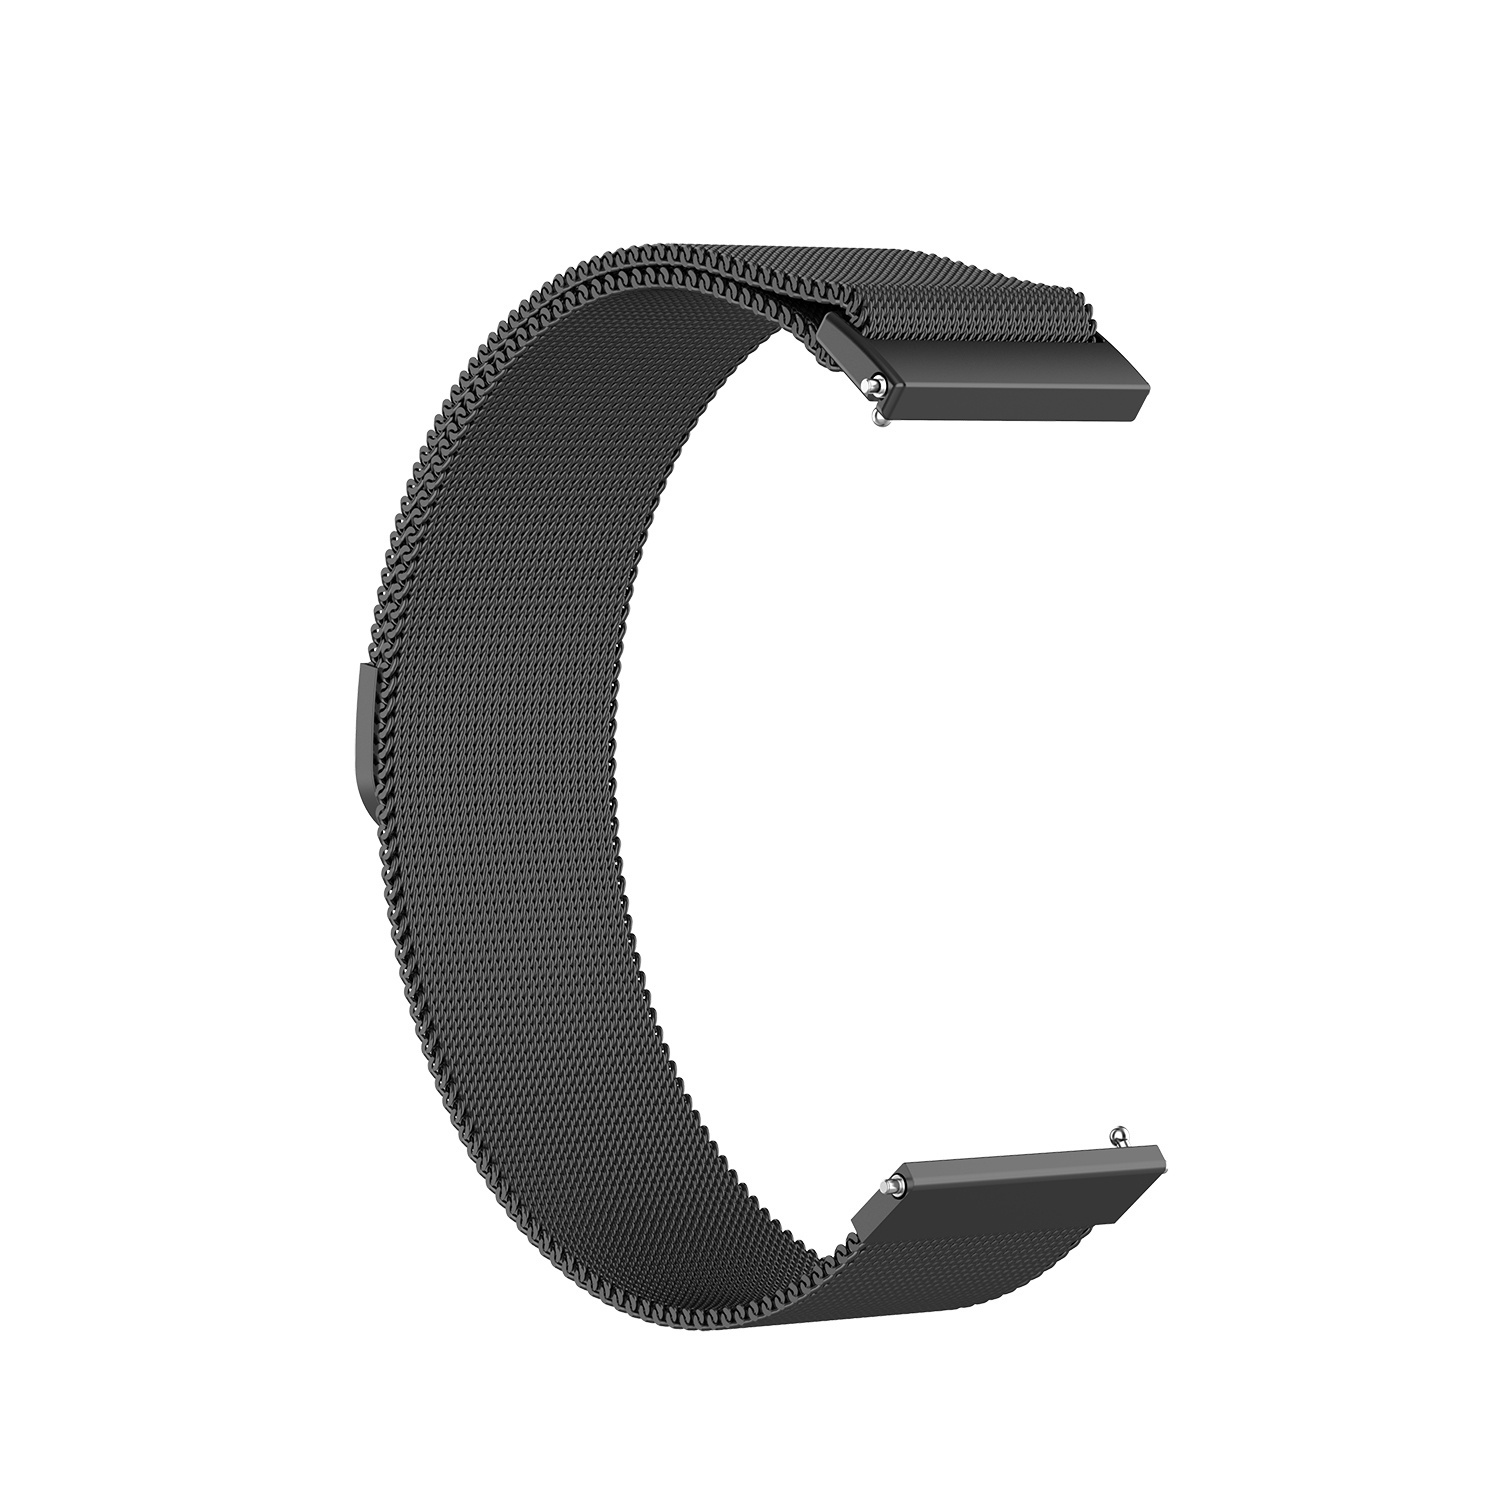 Cinturino loop in maglia milanese per Huawei Watch GT - nero